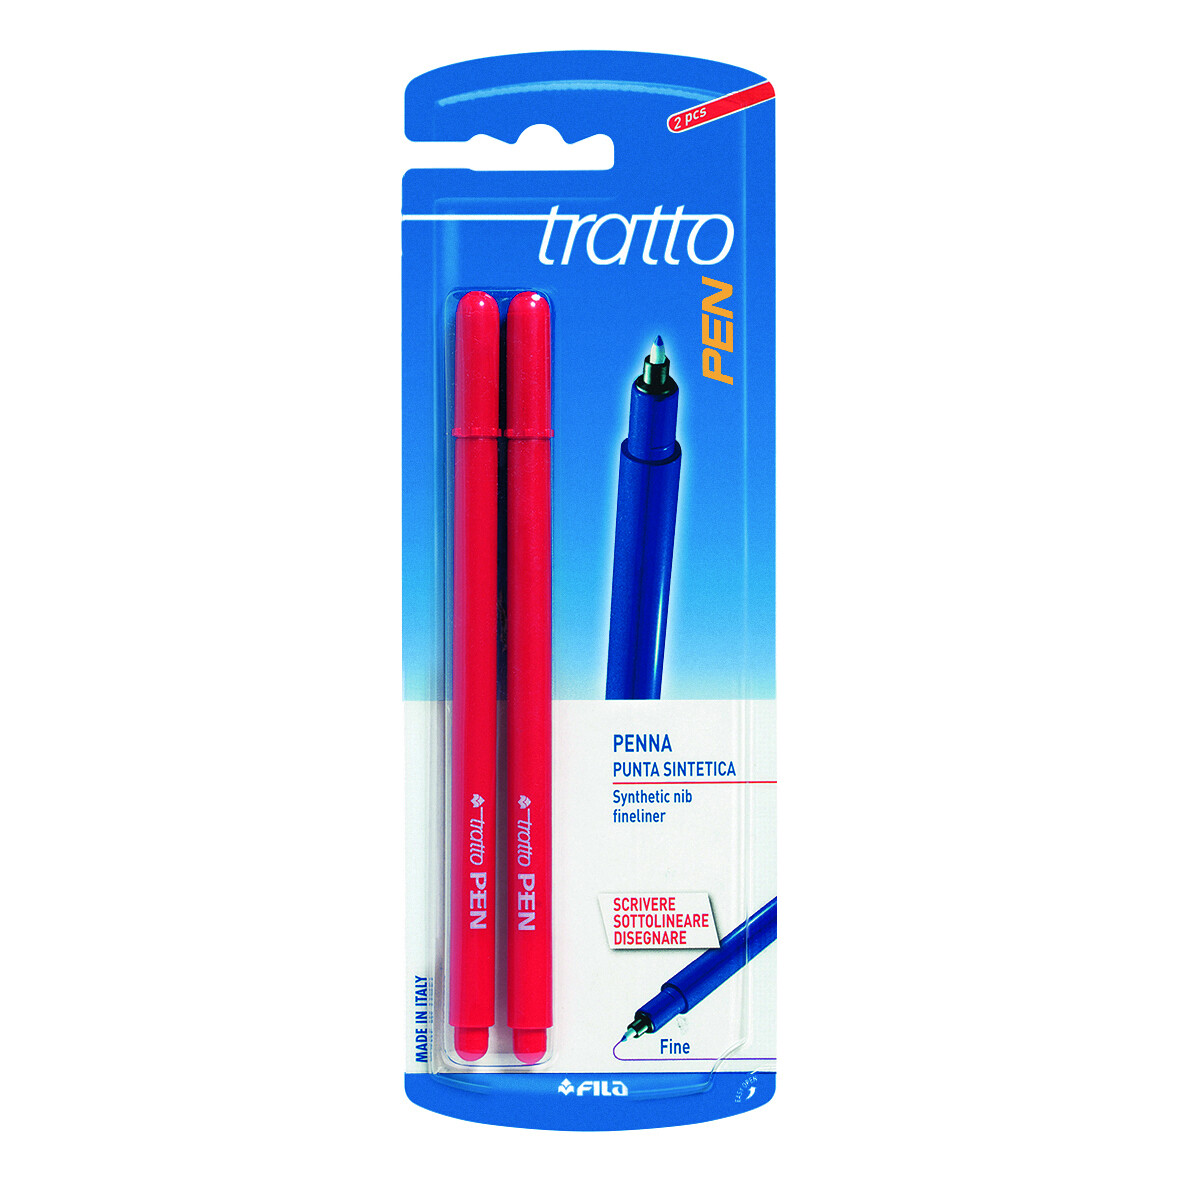 Tratto pen colorati - купить недорого